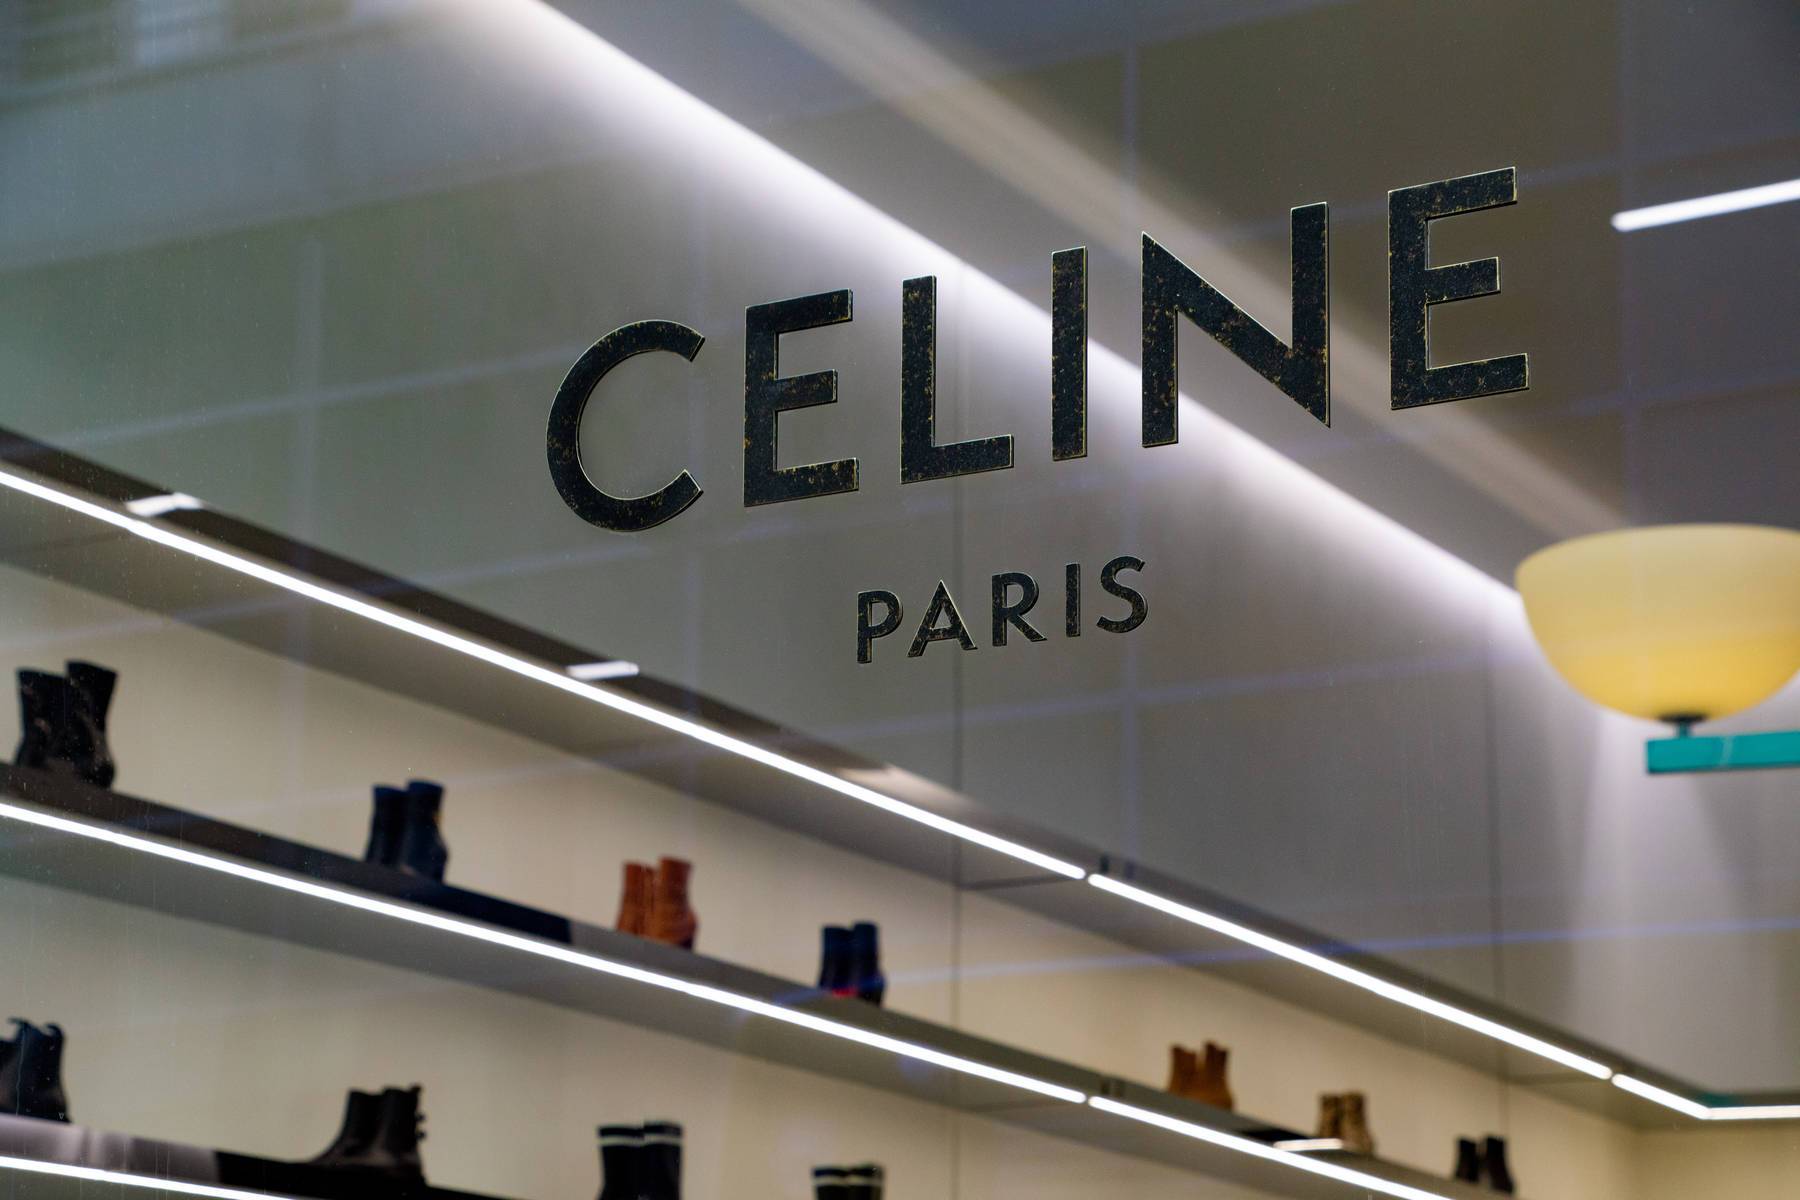 Celine Paris sign on window